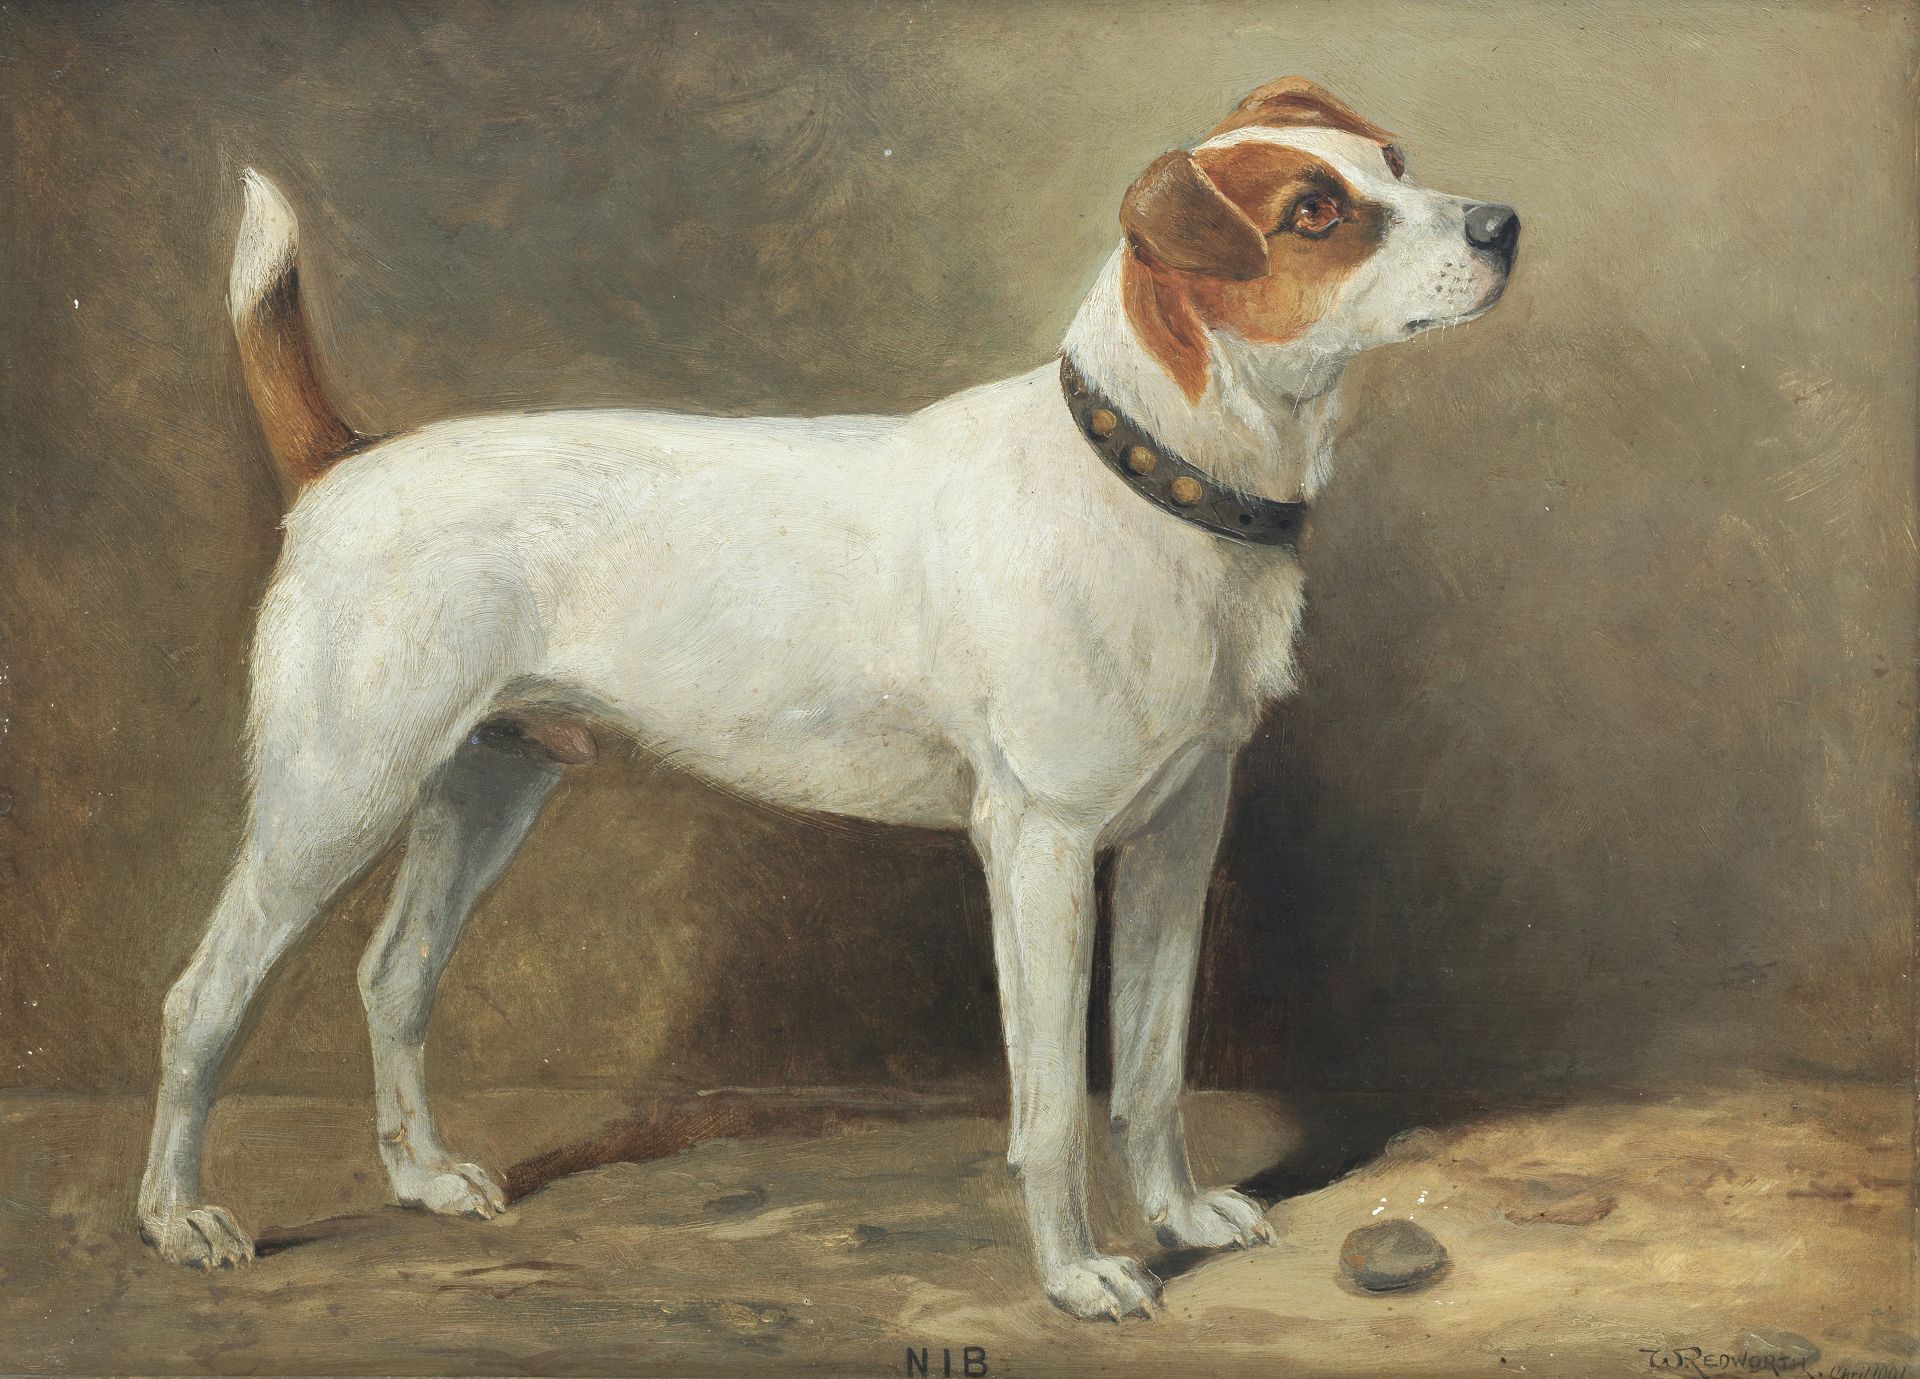 William Josiah Redworth (British, 1873-1947) 'Nib' - A Terrier